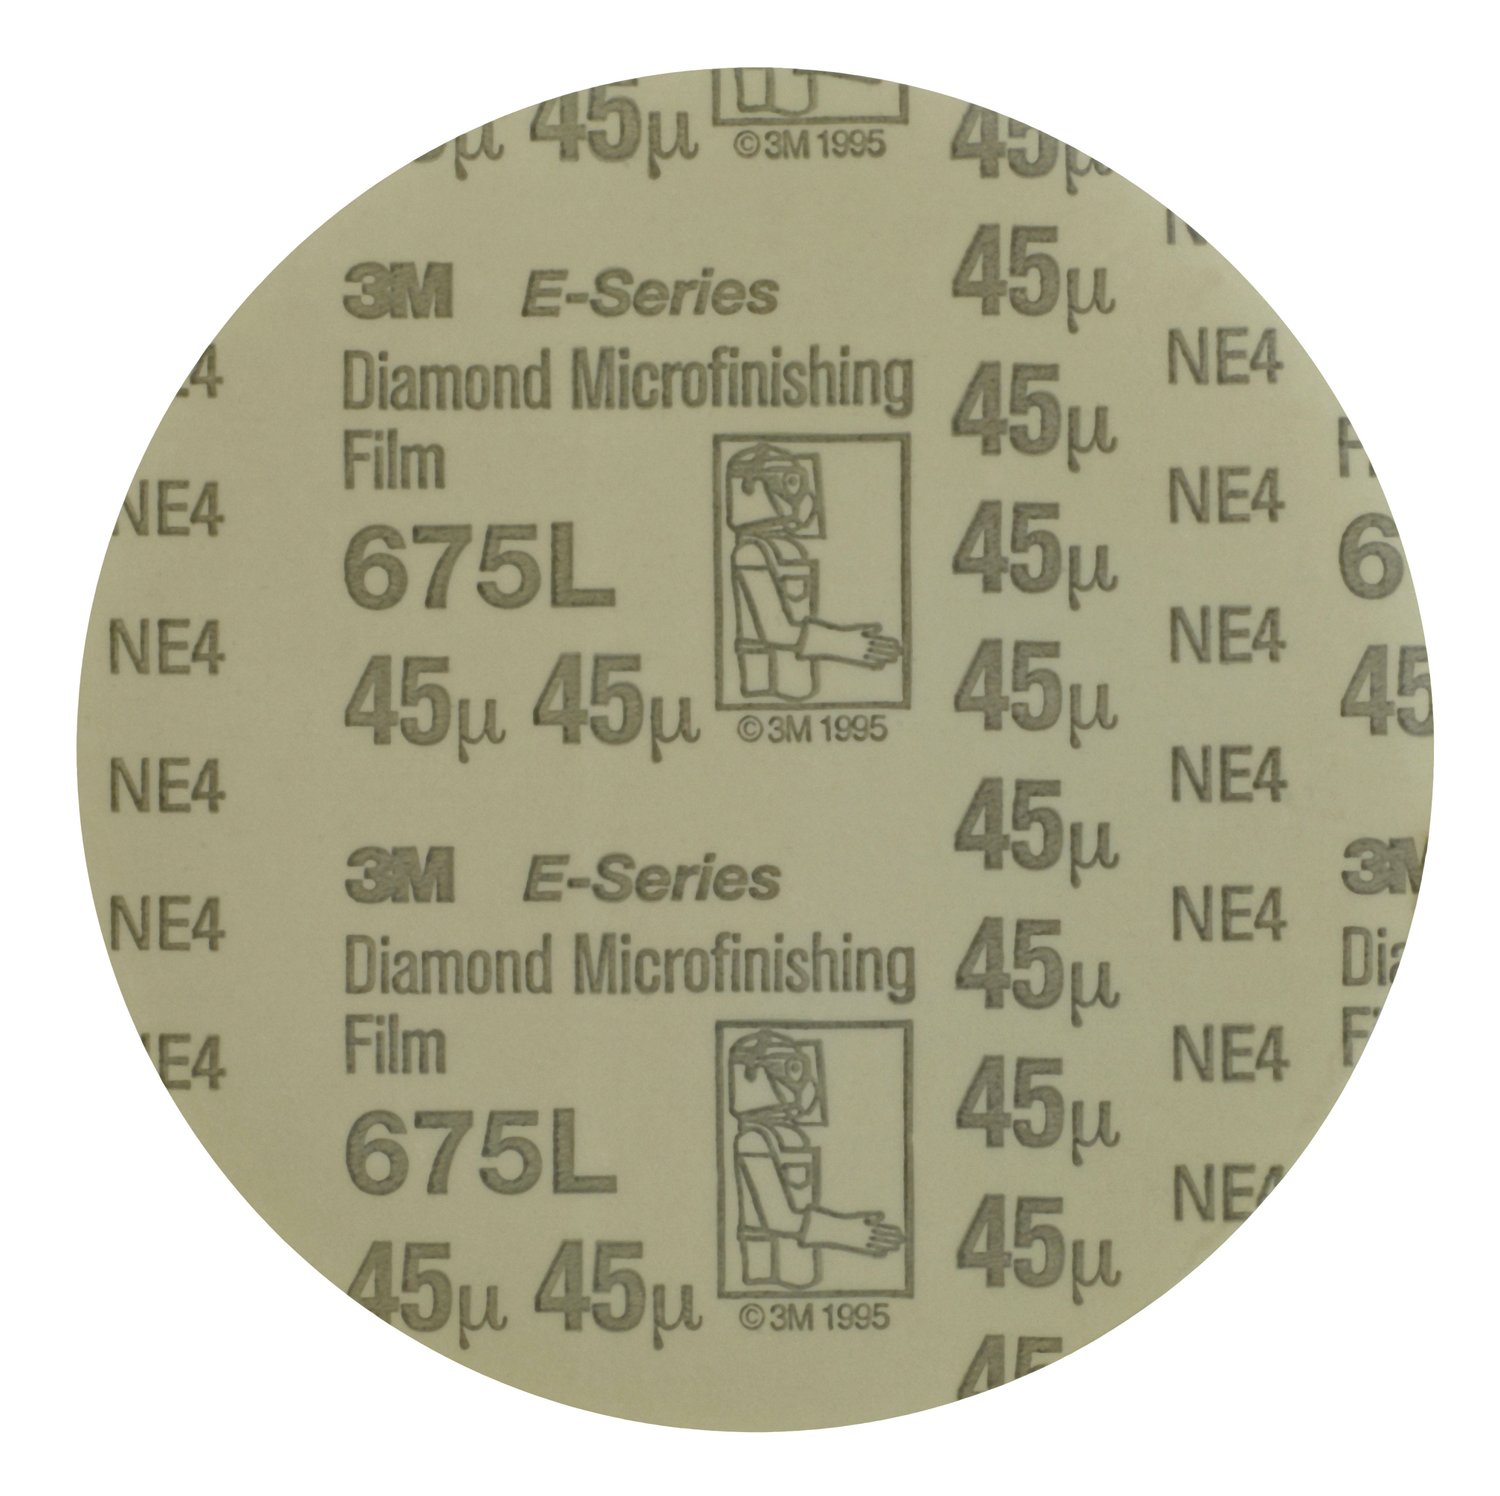 7100070361 - 3M Hookit Diamond Microfinishing Film Disc 675L, 45 Mic, Config